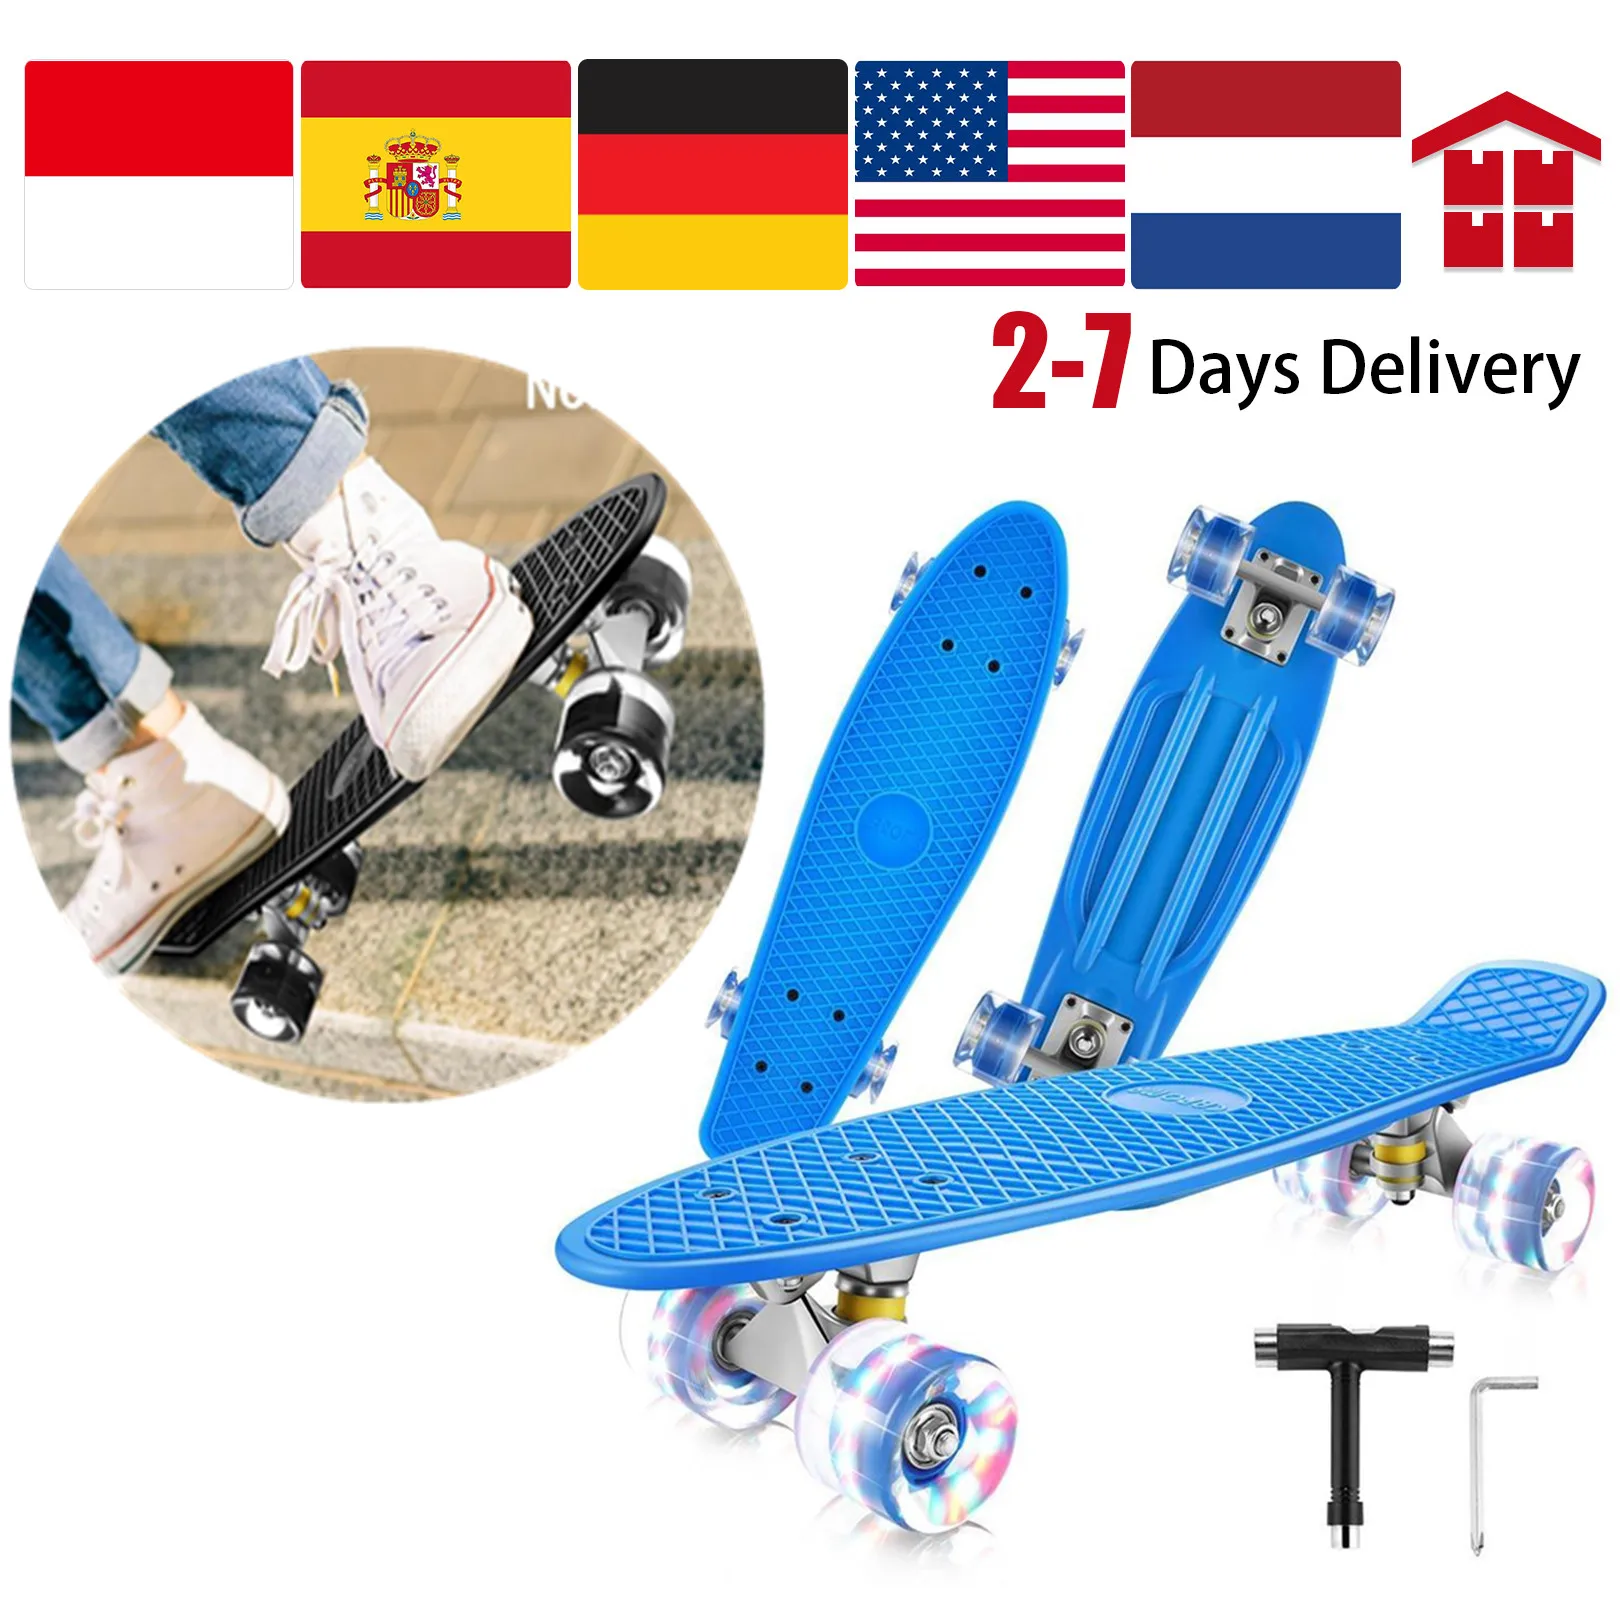 

78A PU Wheel Complete Skate Boards Skateboard LED Wheels for Beginners Teens Girls Boys Deck Size: 22x5.7inch